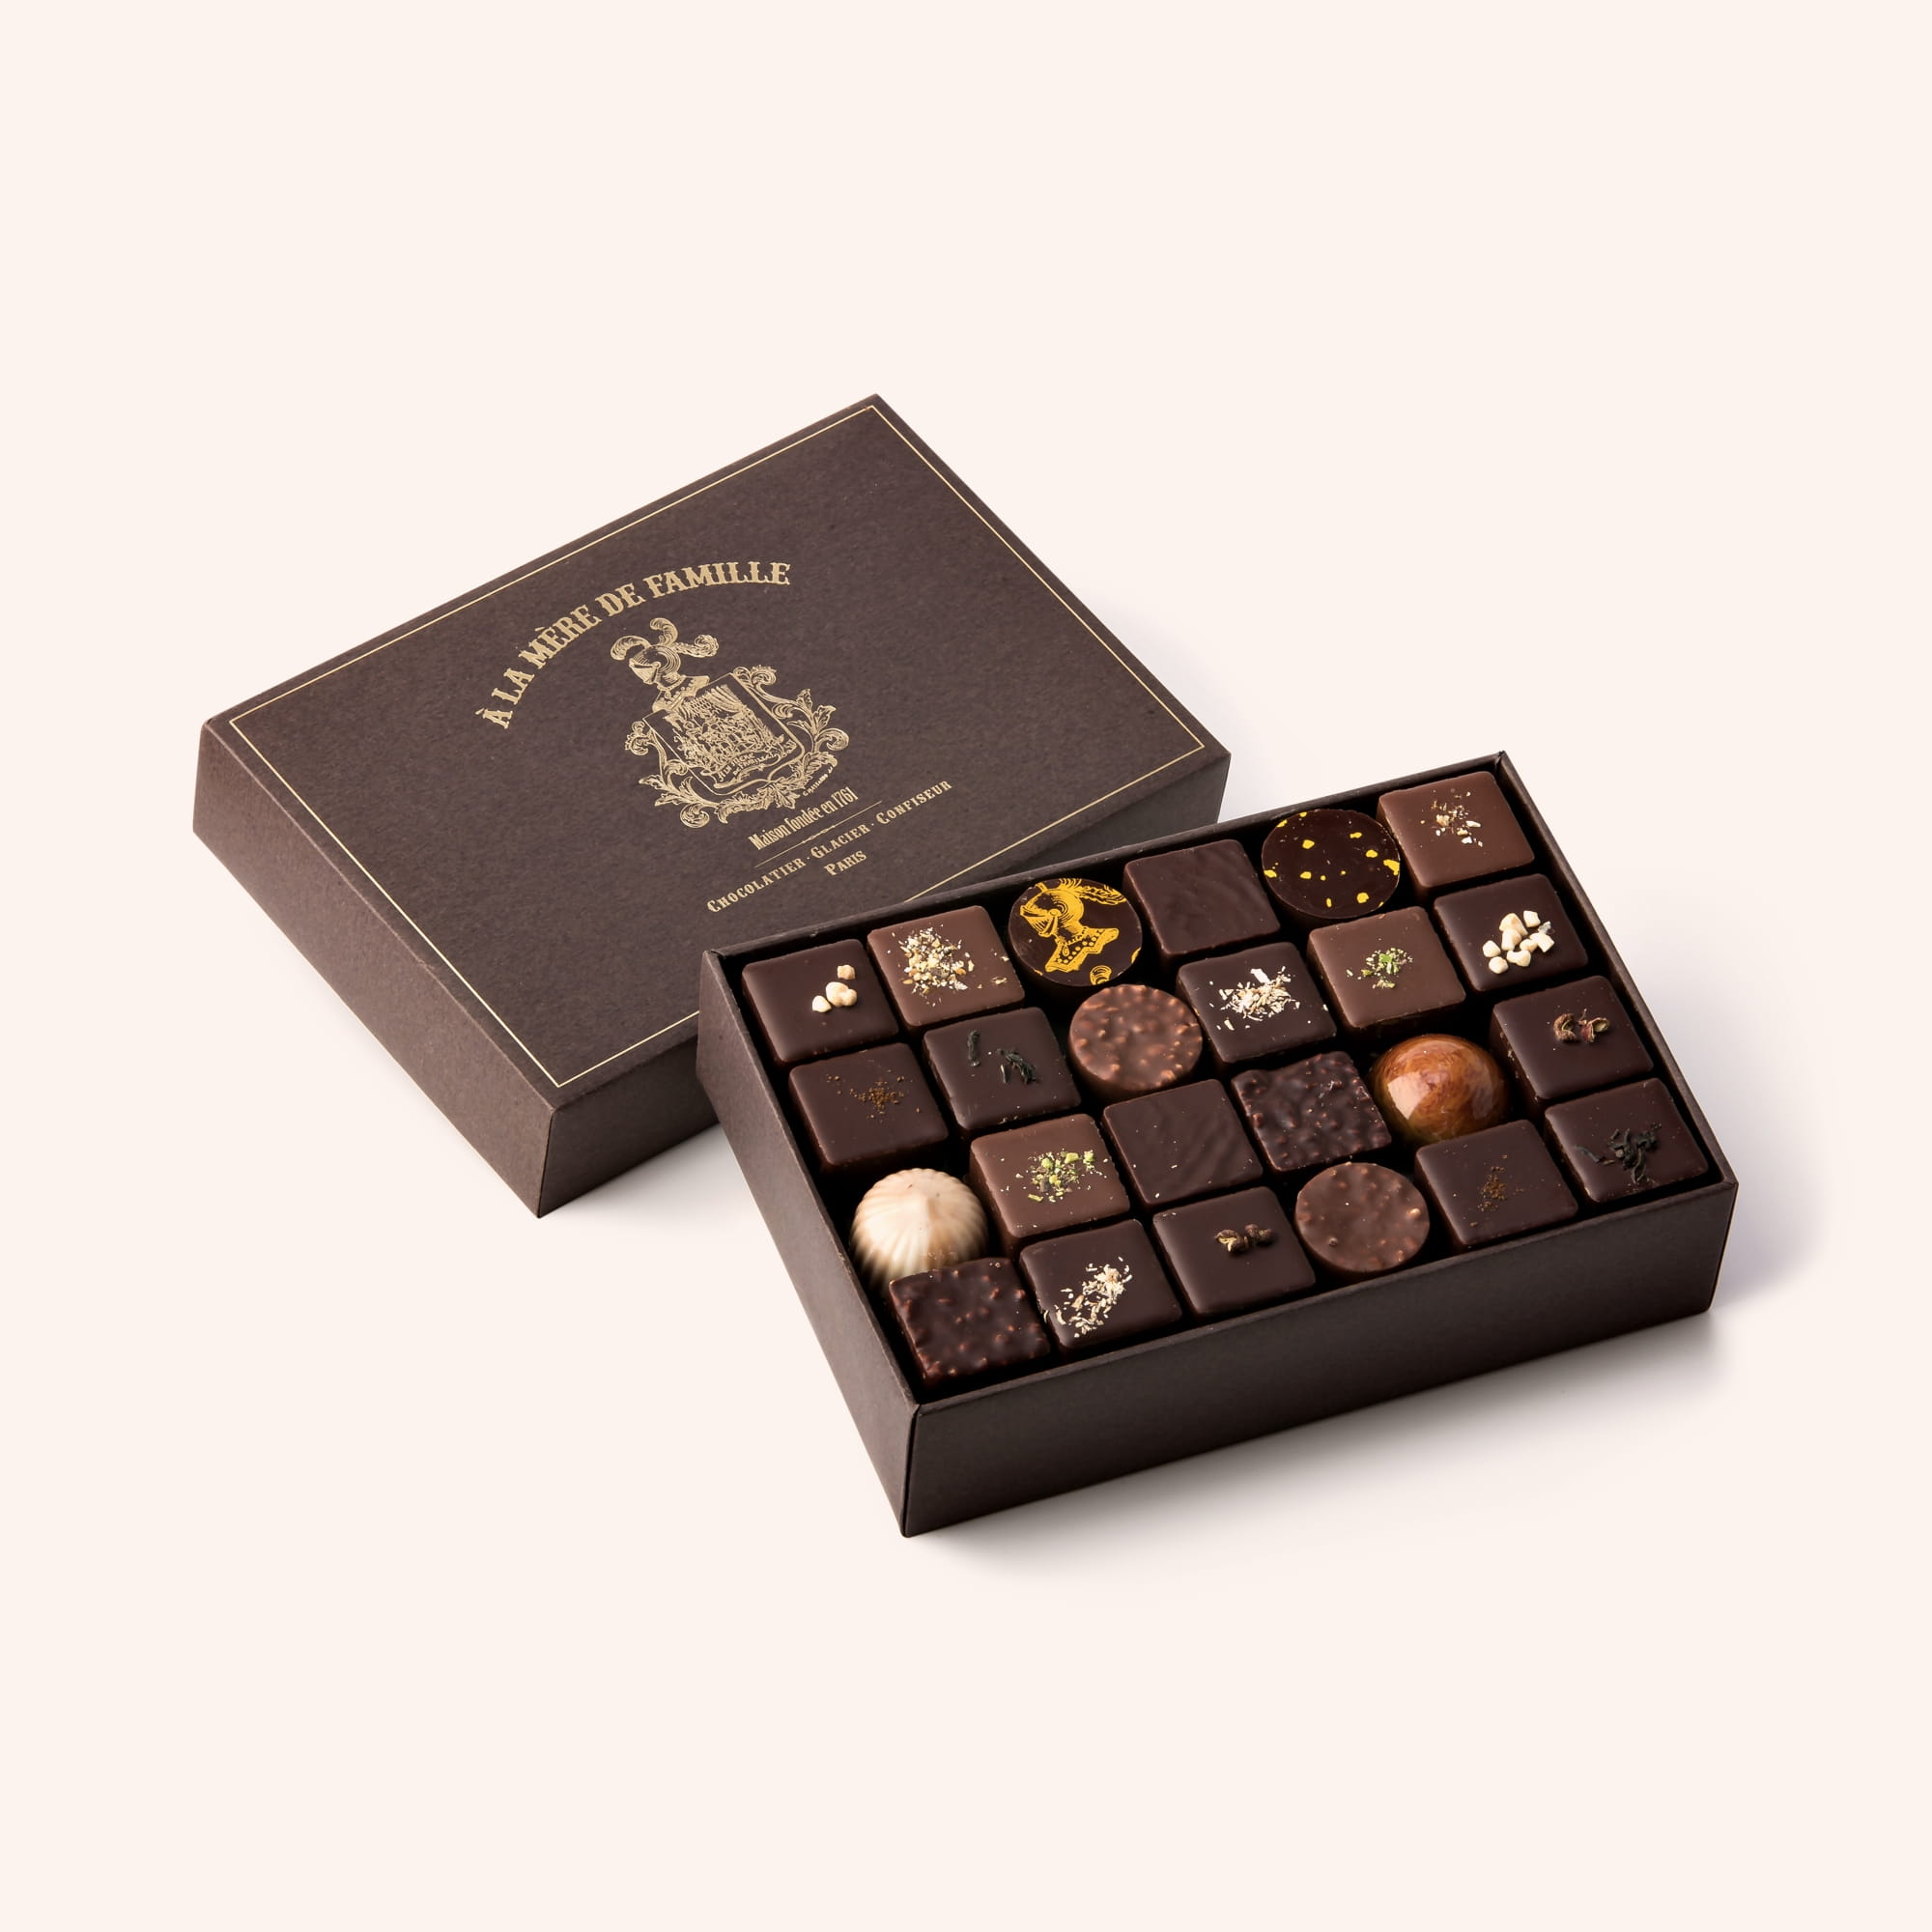 Cadeau au chocolat, Artisanal & original